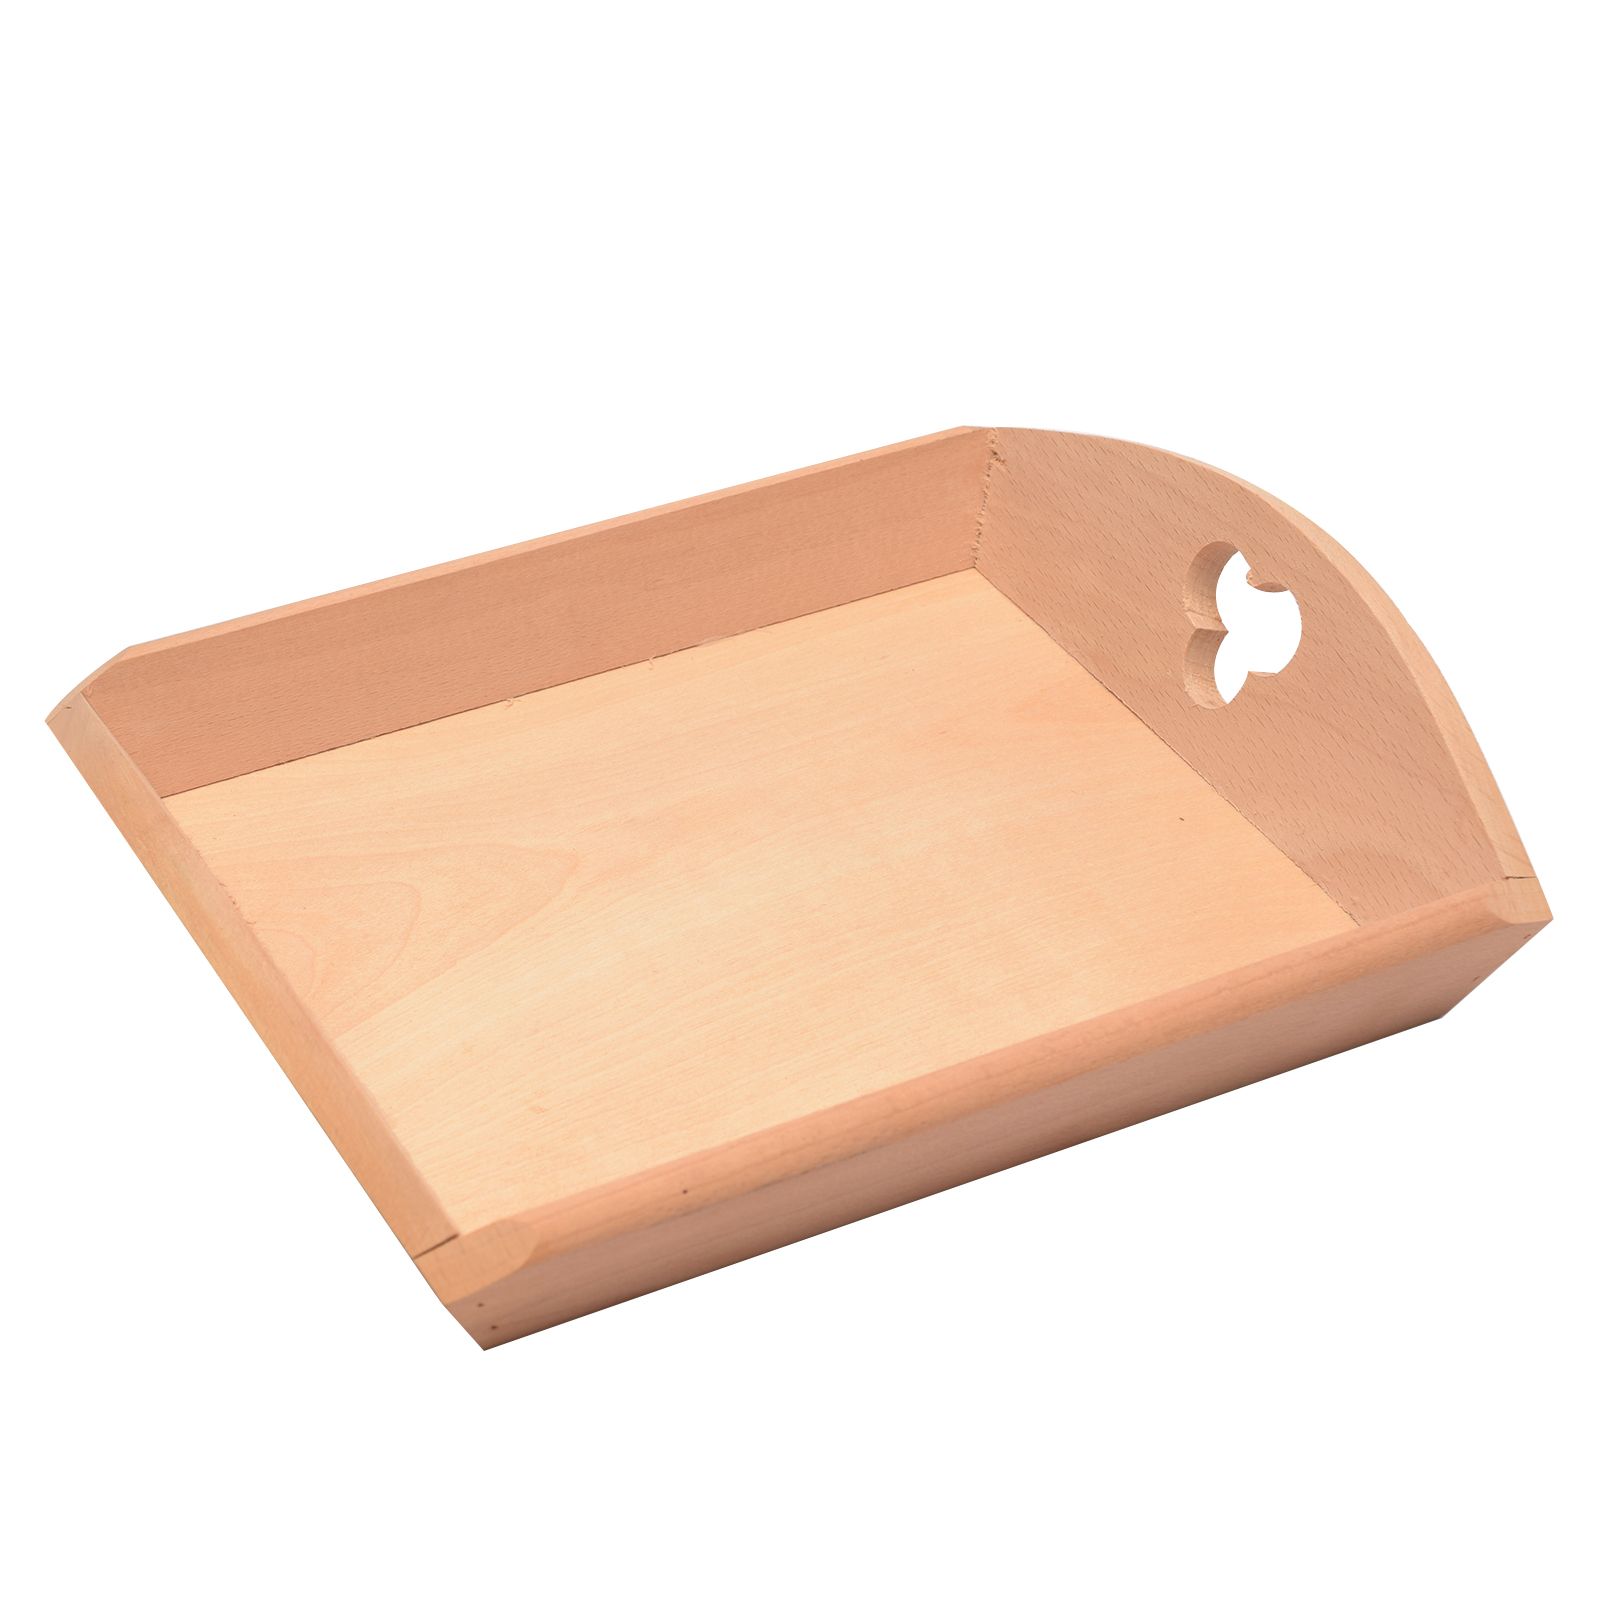 Vaessen Creative • Wooden Service tray 21x27cm